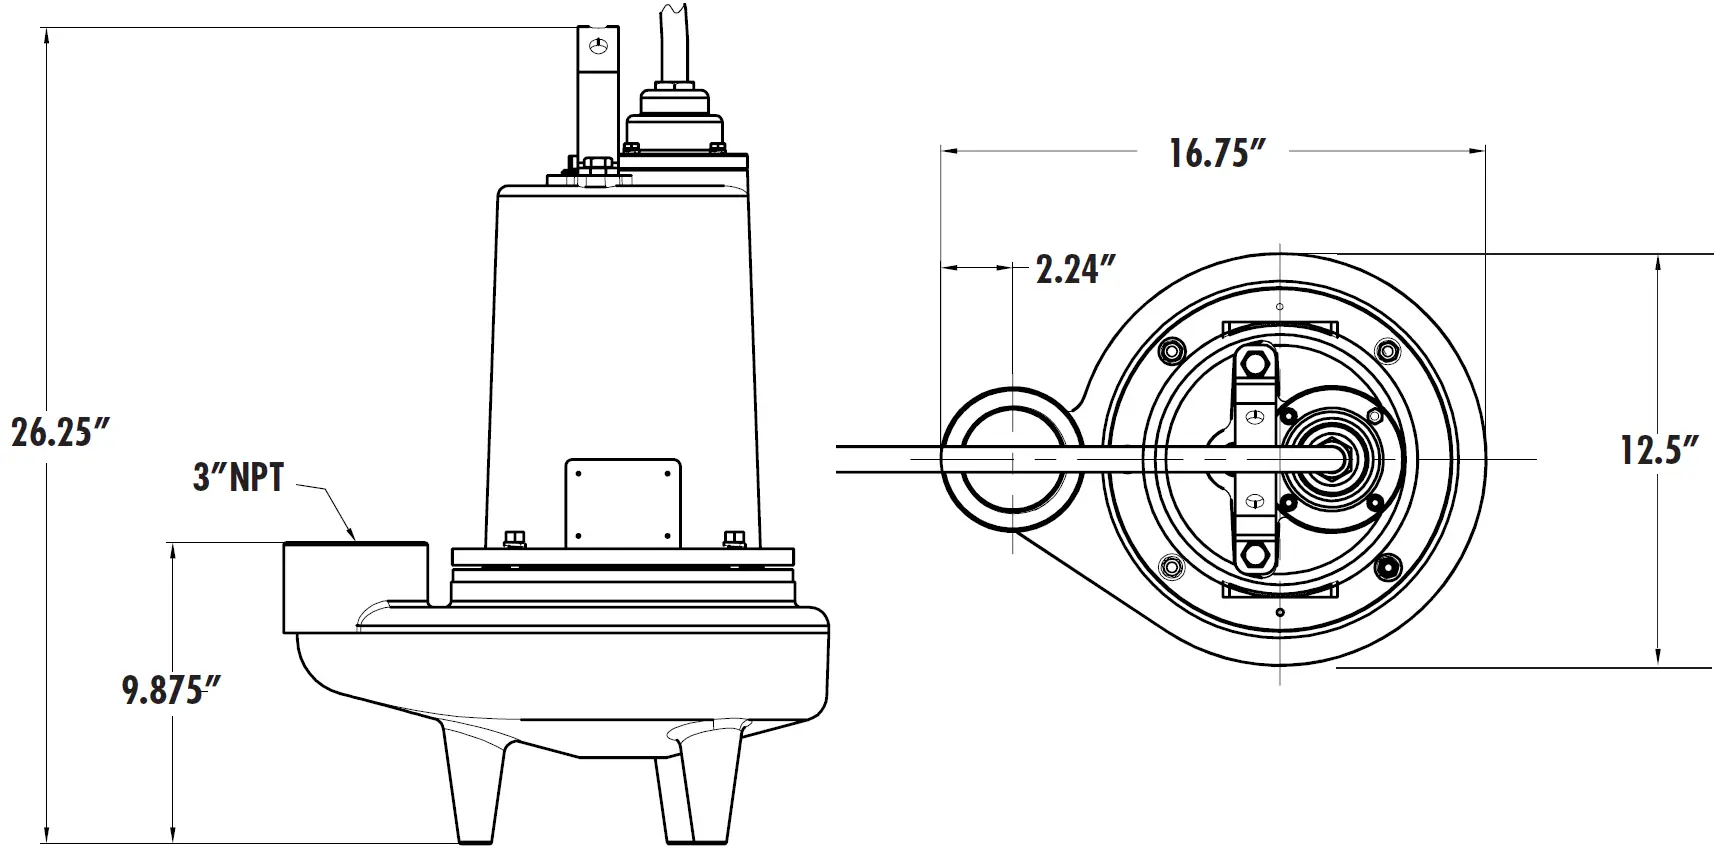 SWF300 Pump Dimensions